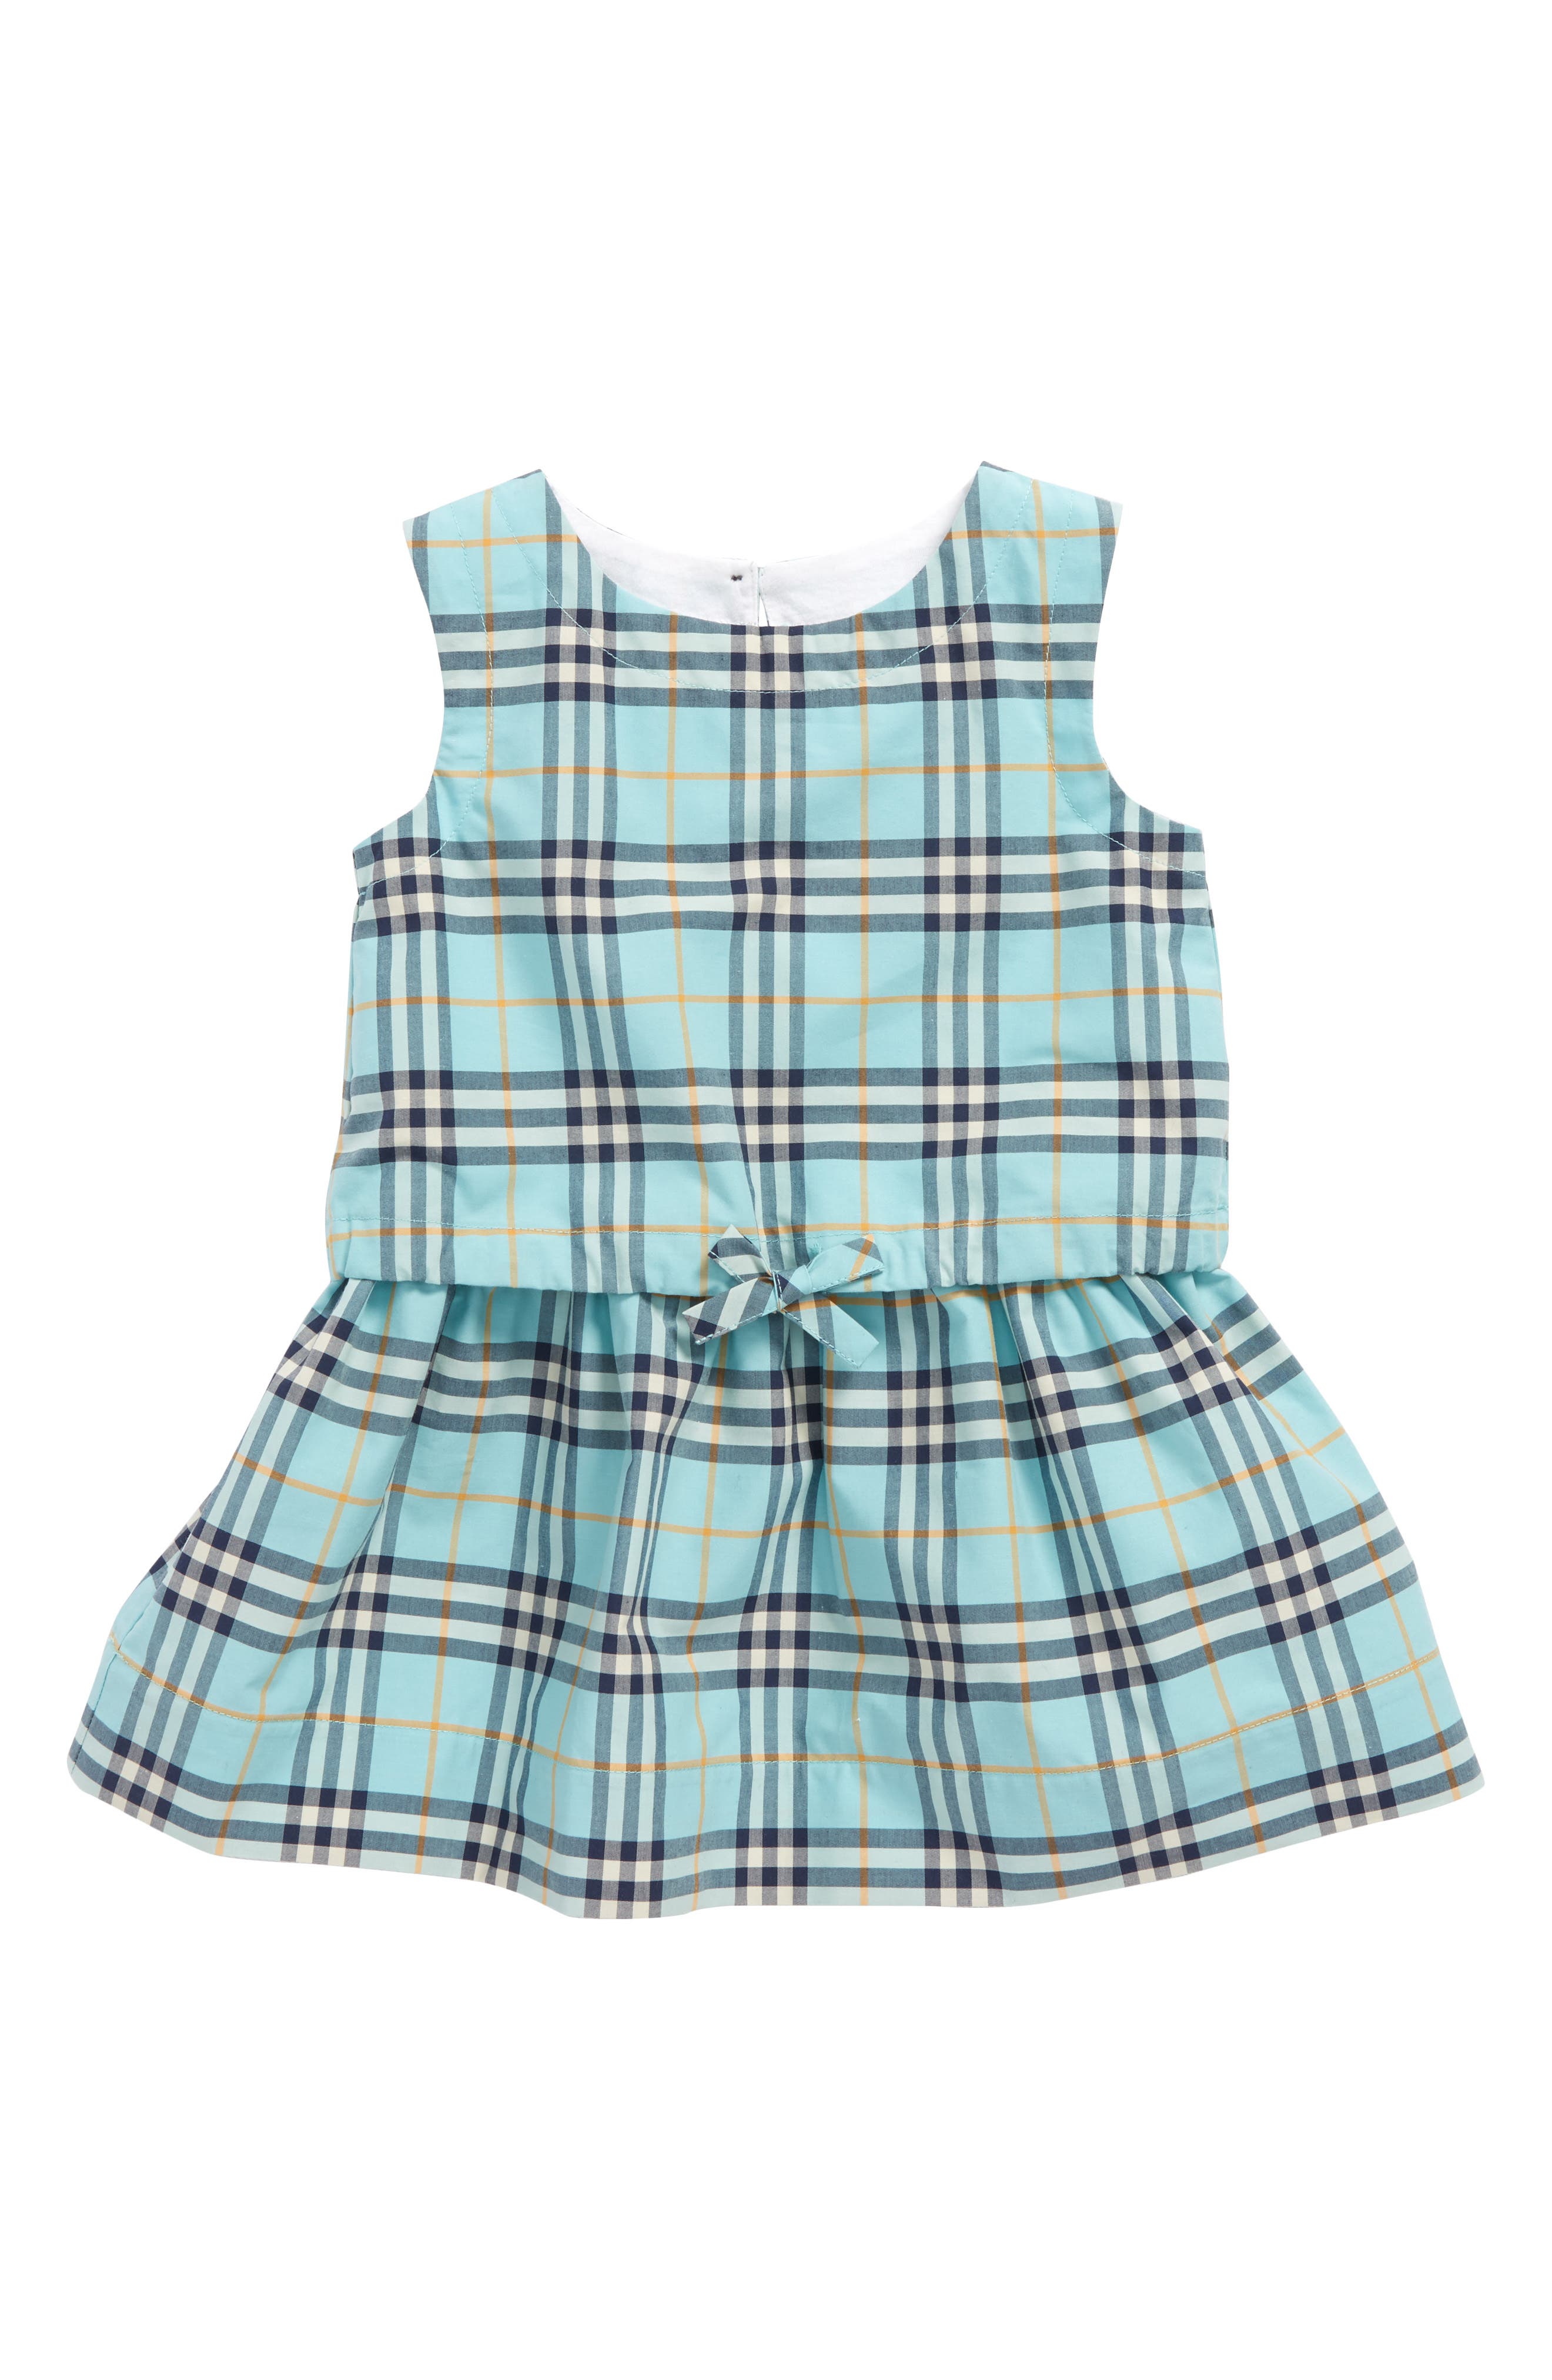 burberry dress for baby girl